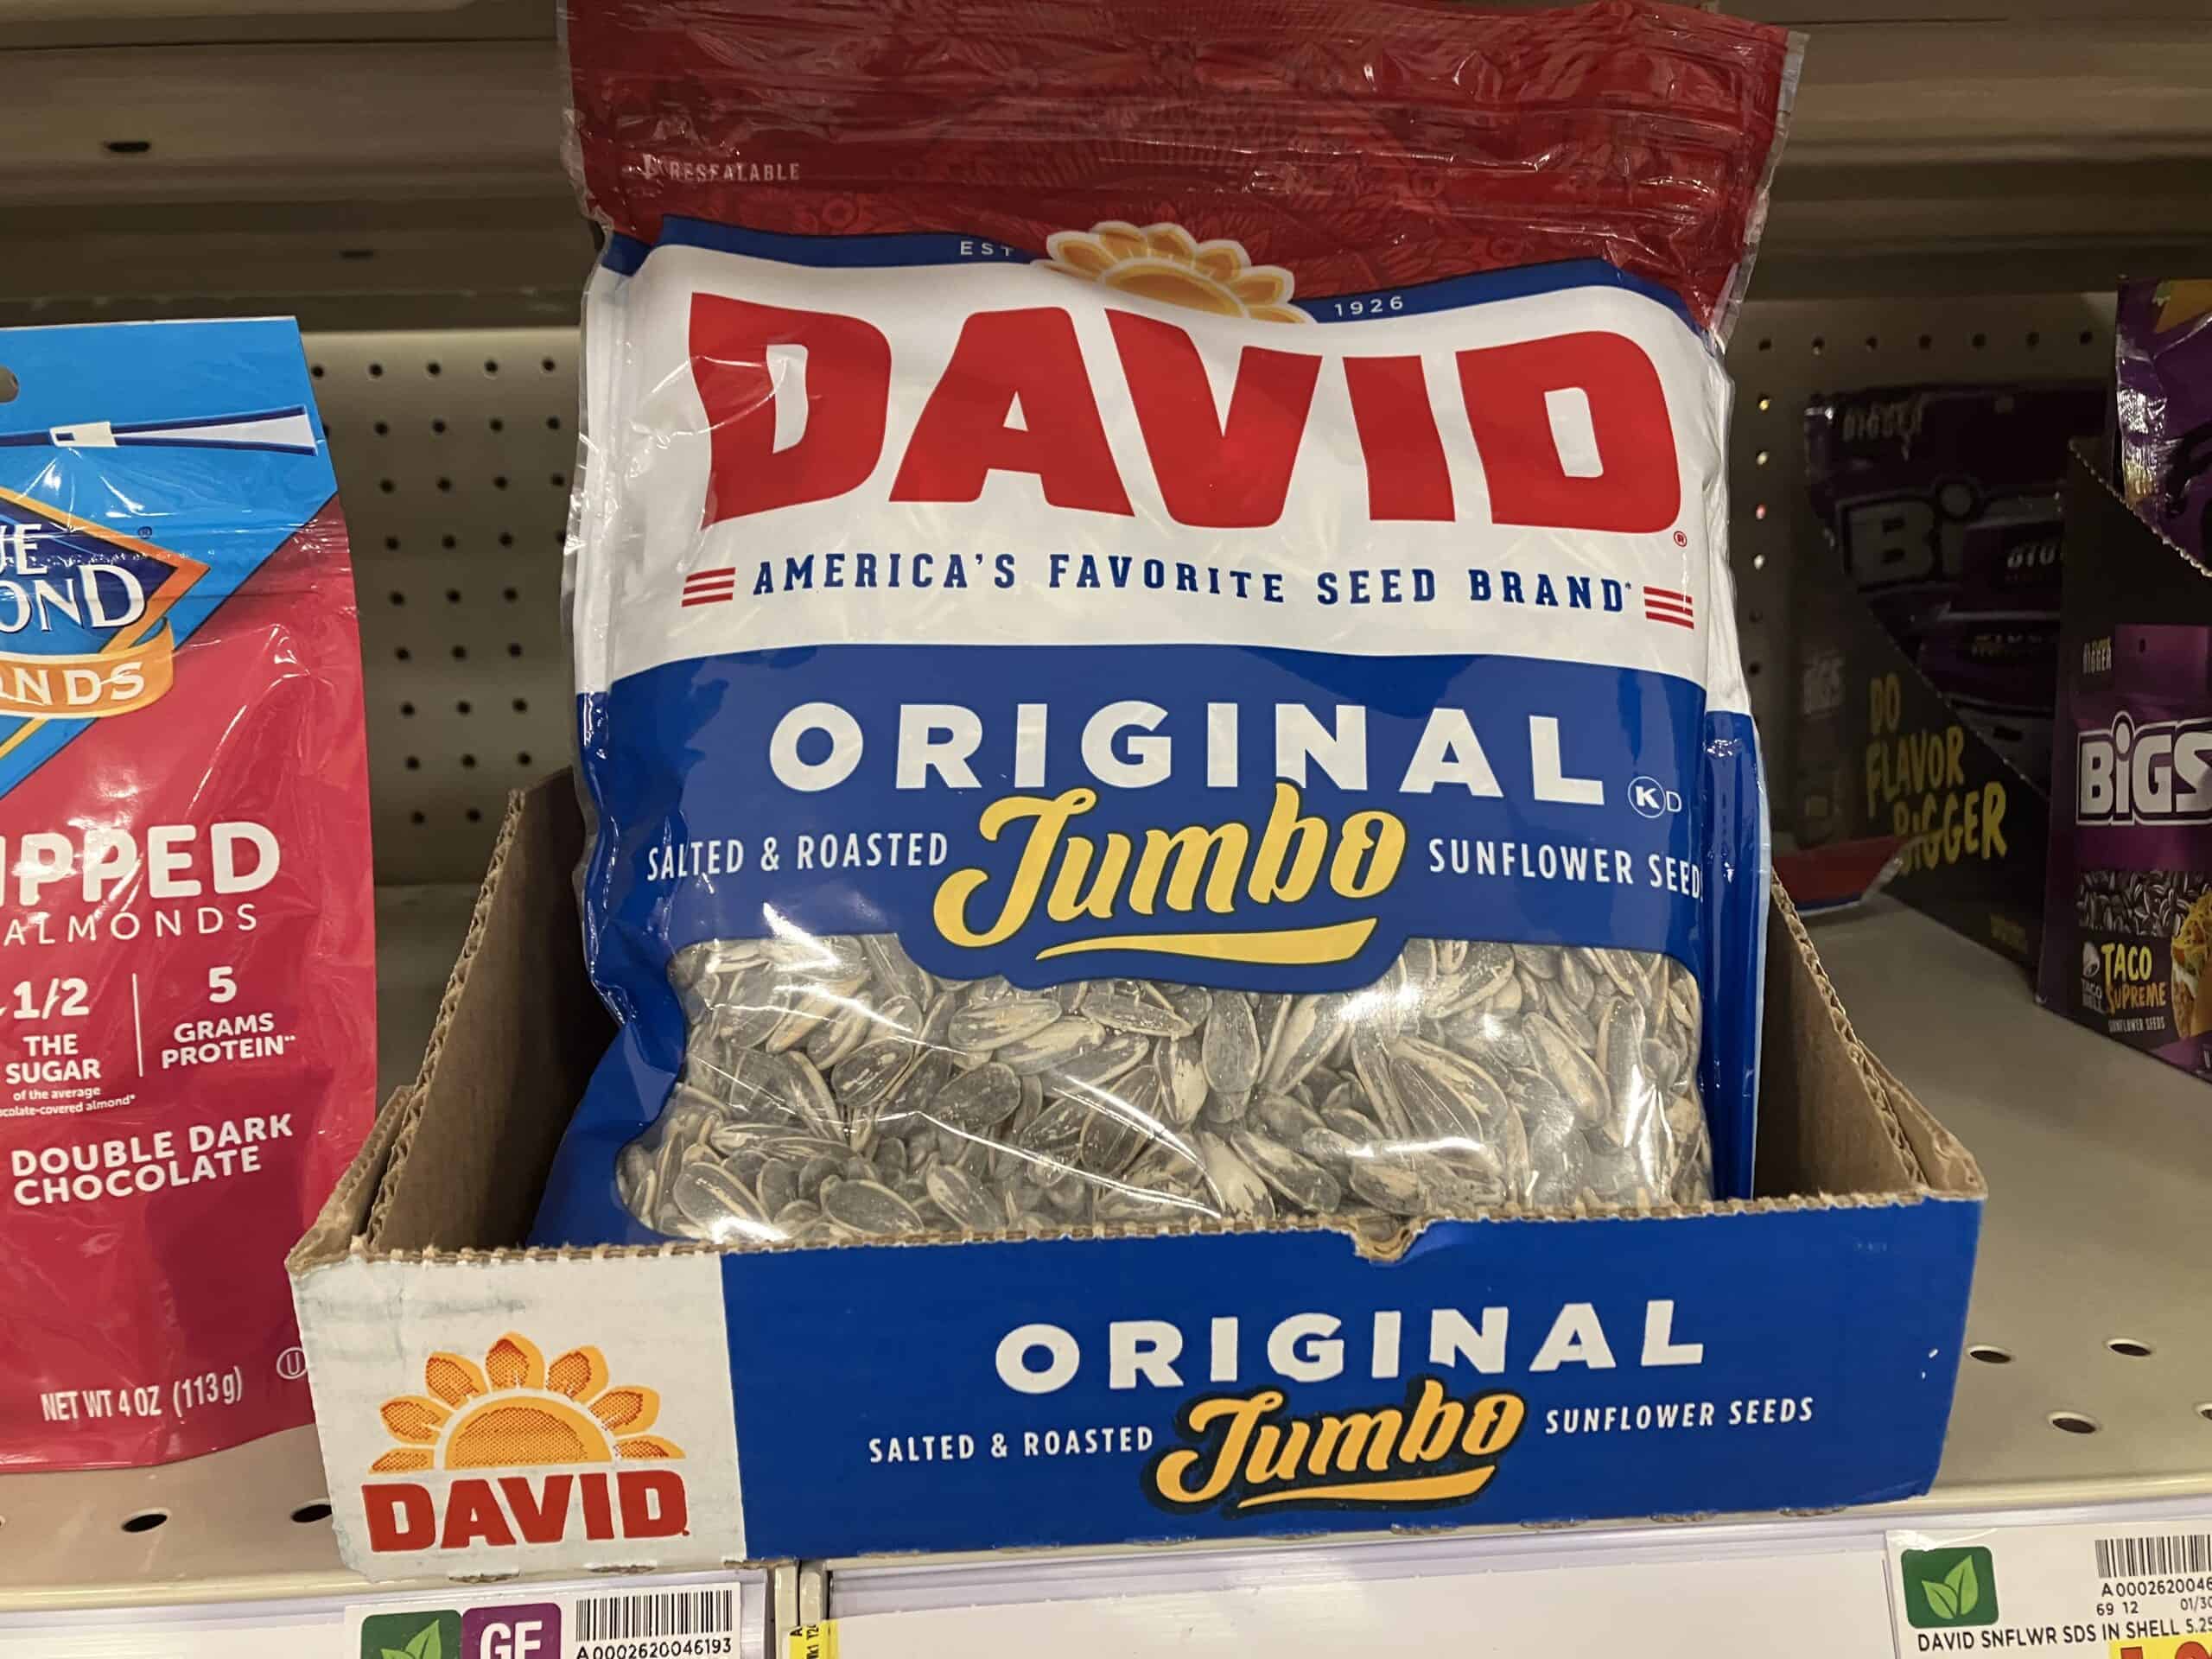 DAVID jumbo sunflower seeds